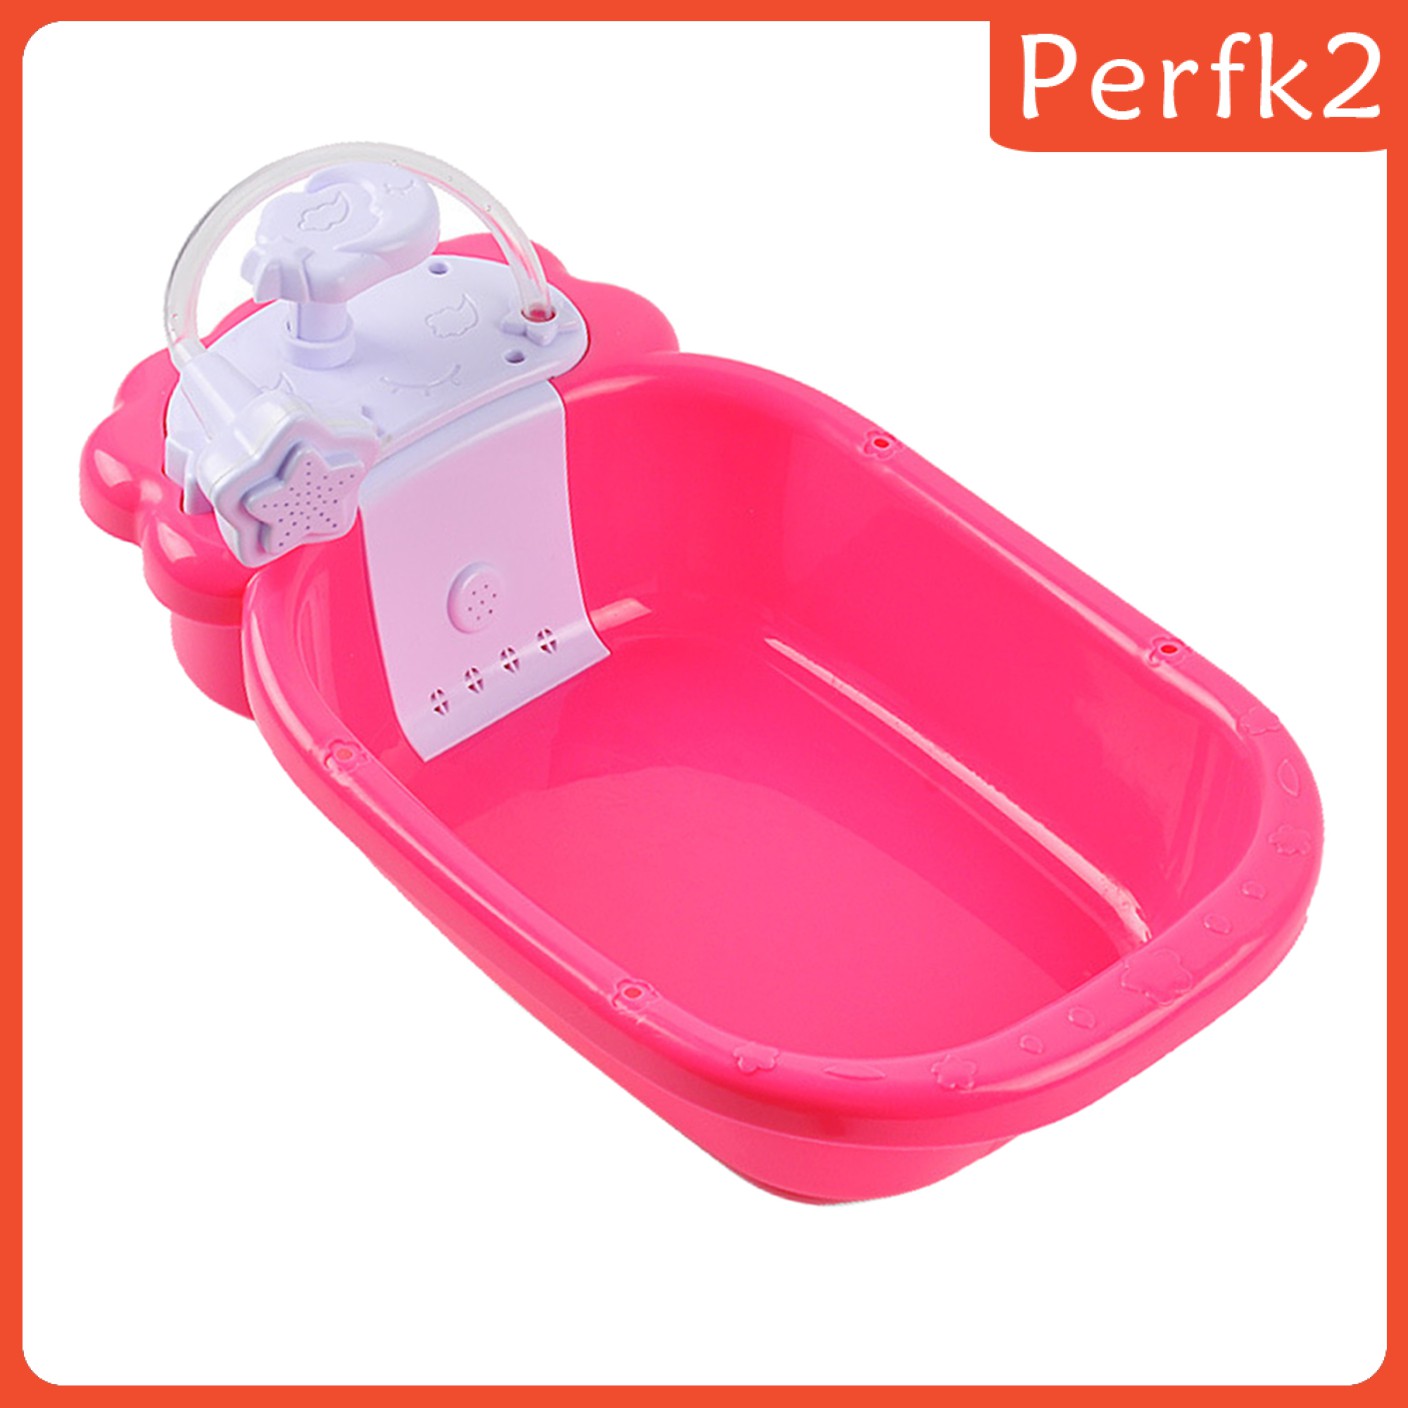 [PERFK2] Doll Bath Play Tub with Shower Pretend Play Infant Baby Kids Doll Toy Bathtub